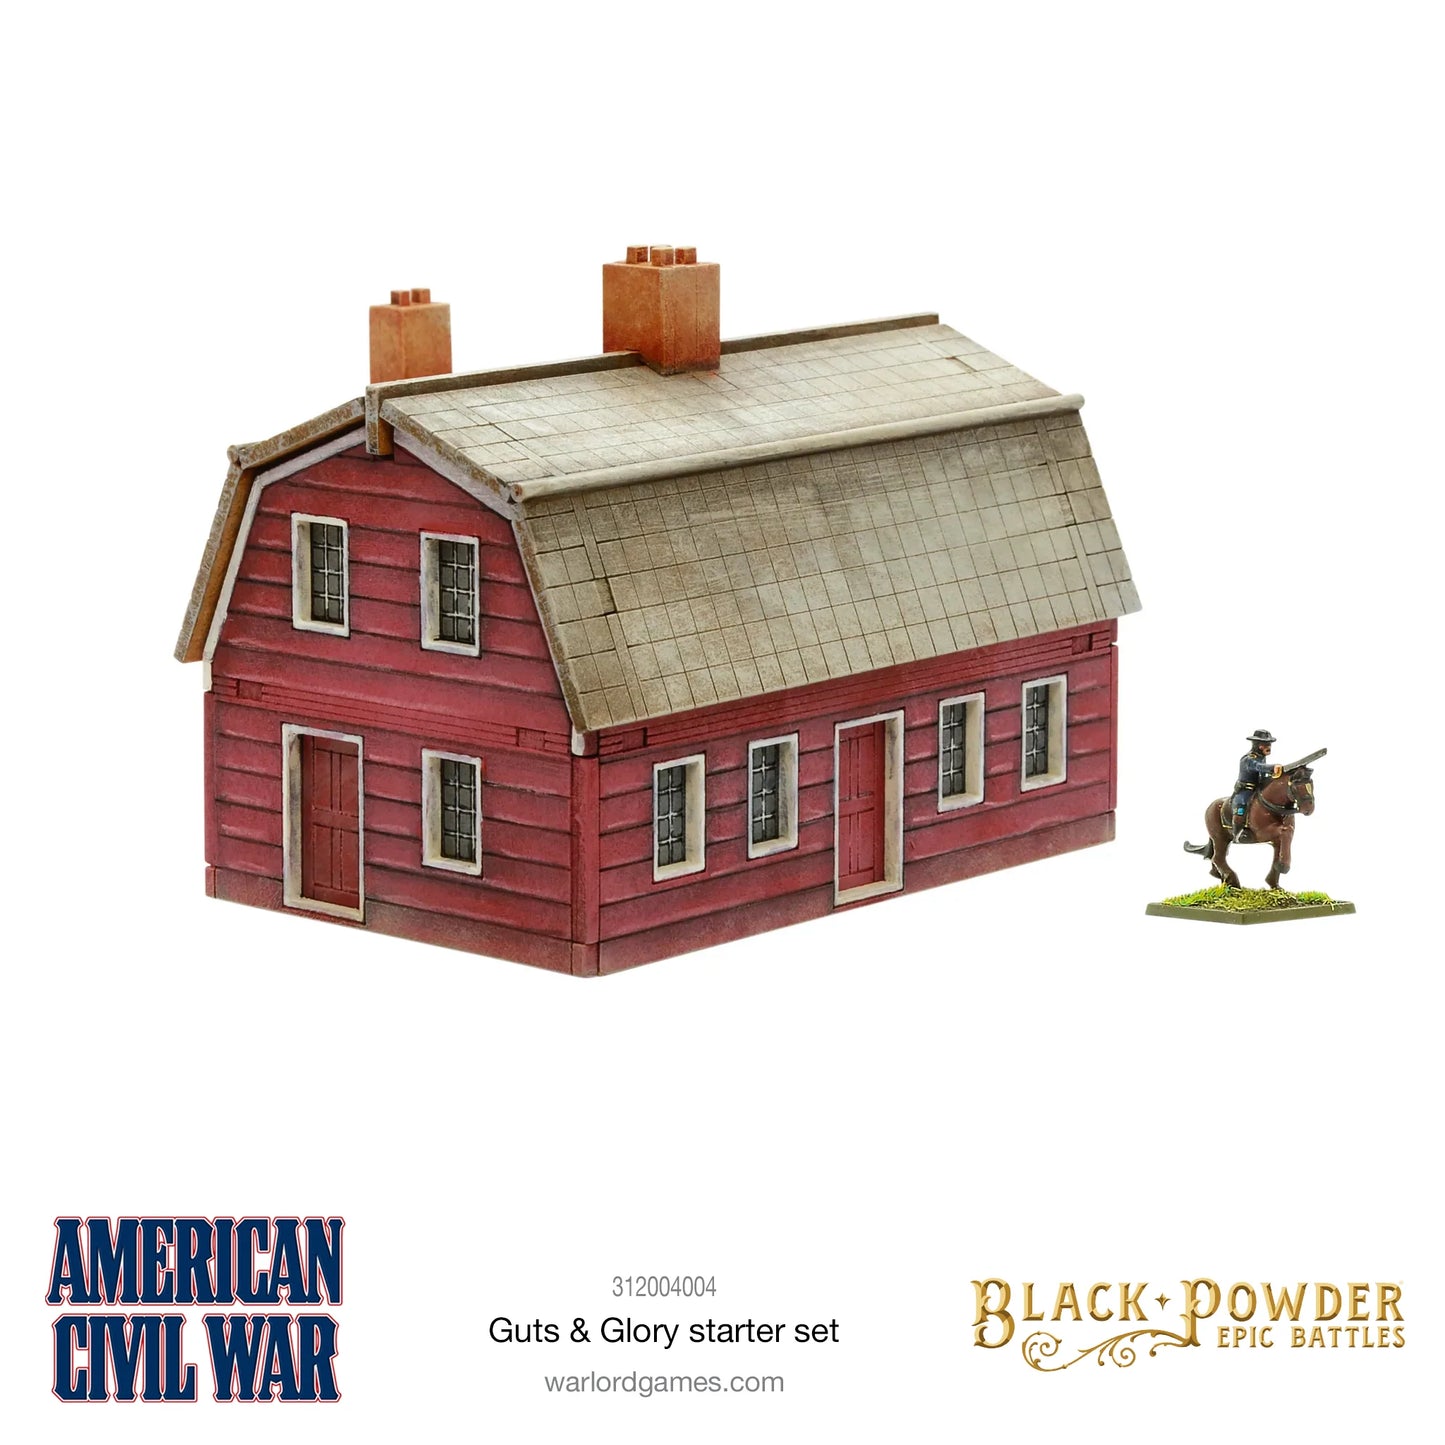 Epic Battles (Black Powder) - American Civil War Guts & Glory Starter Set